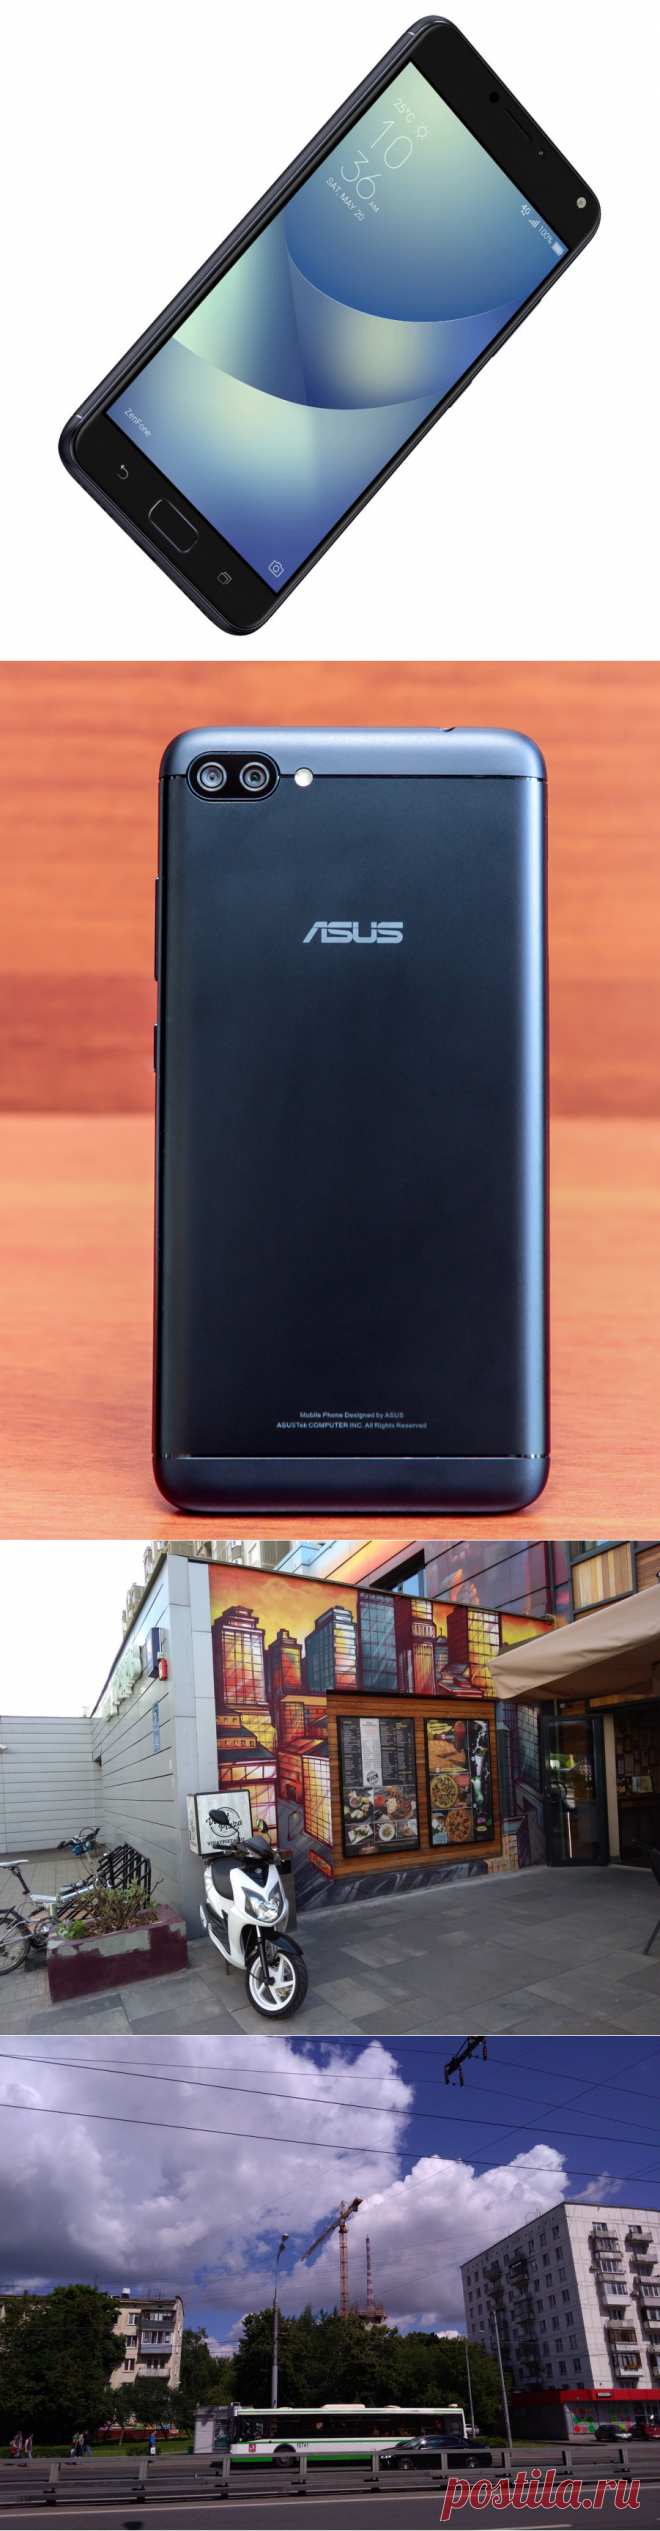 Обзор смартфона ASUS ZenFone 4 Max / Блог компании ASUS Russia / Geektimes